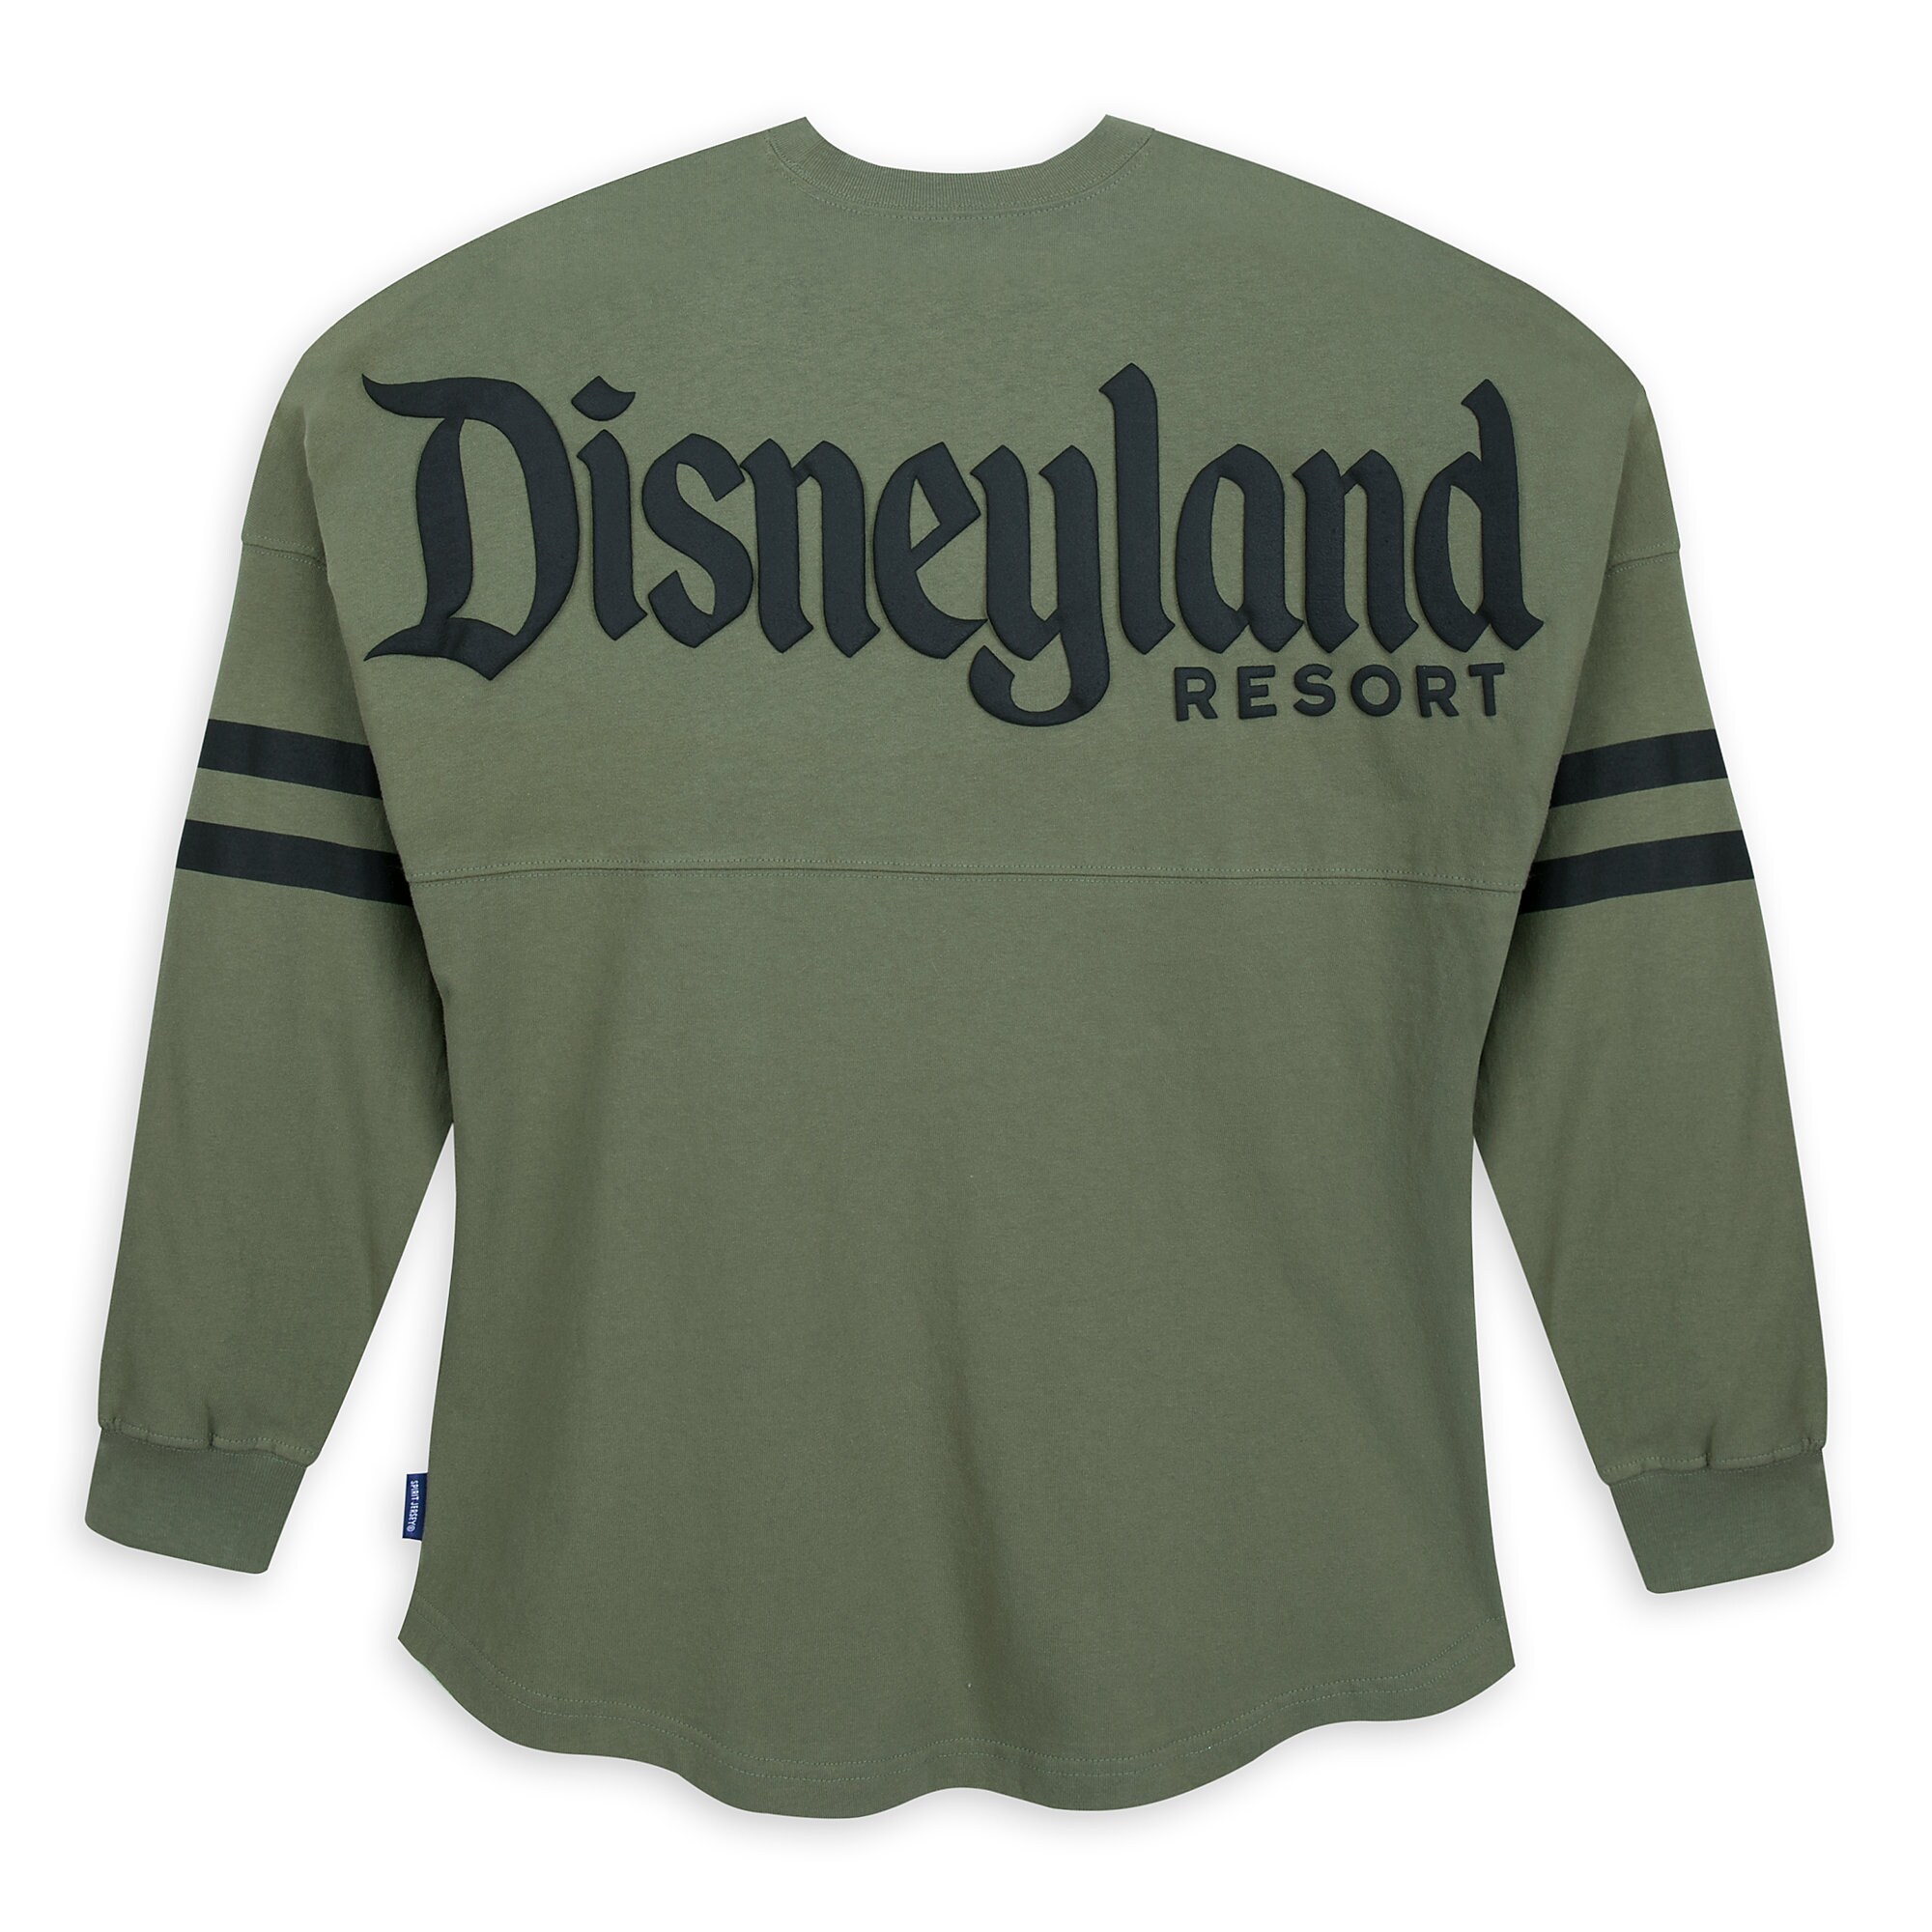 Disneyland Spirit Jersey for Adults - Sage